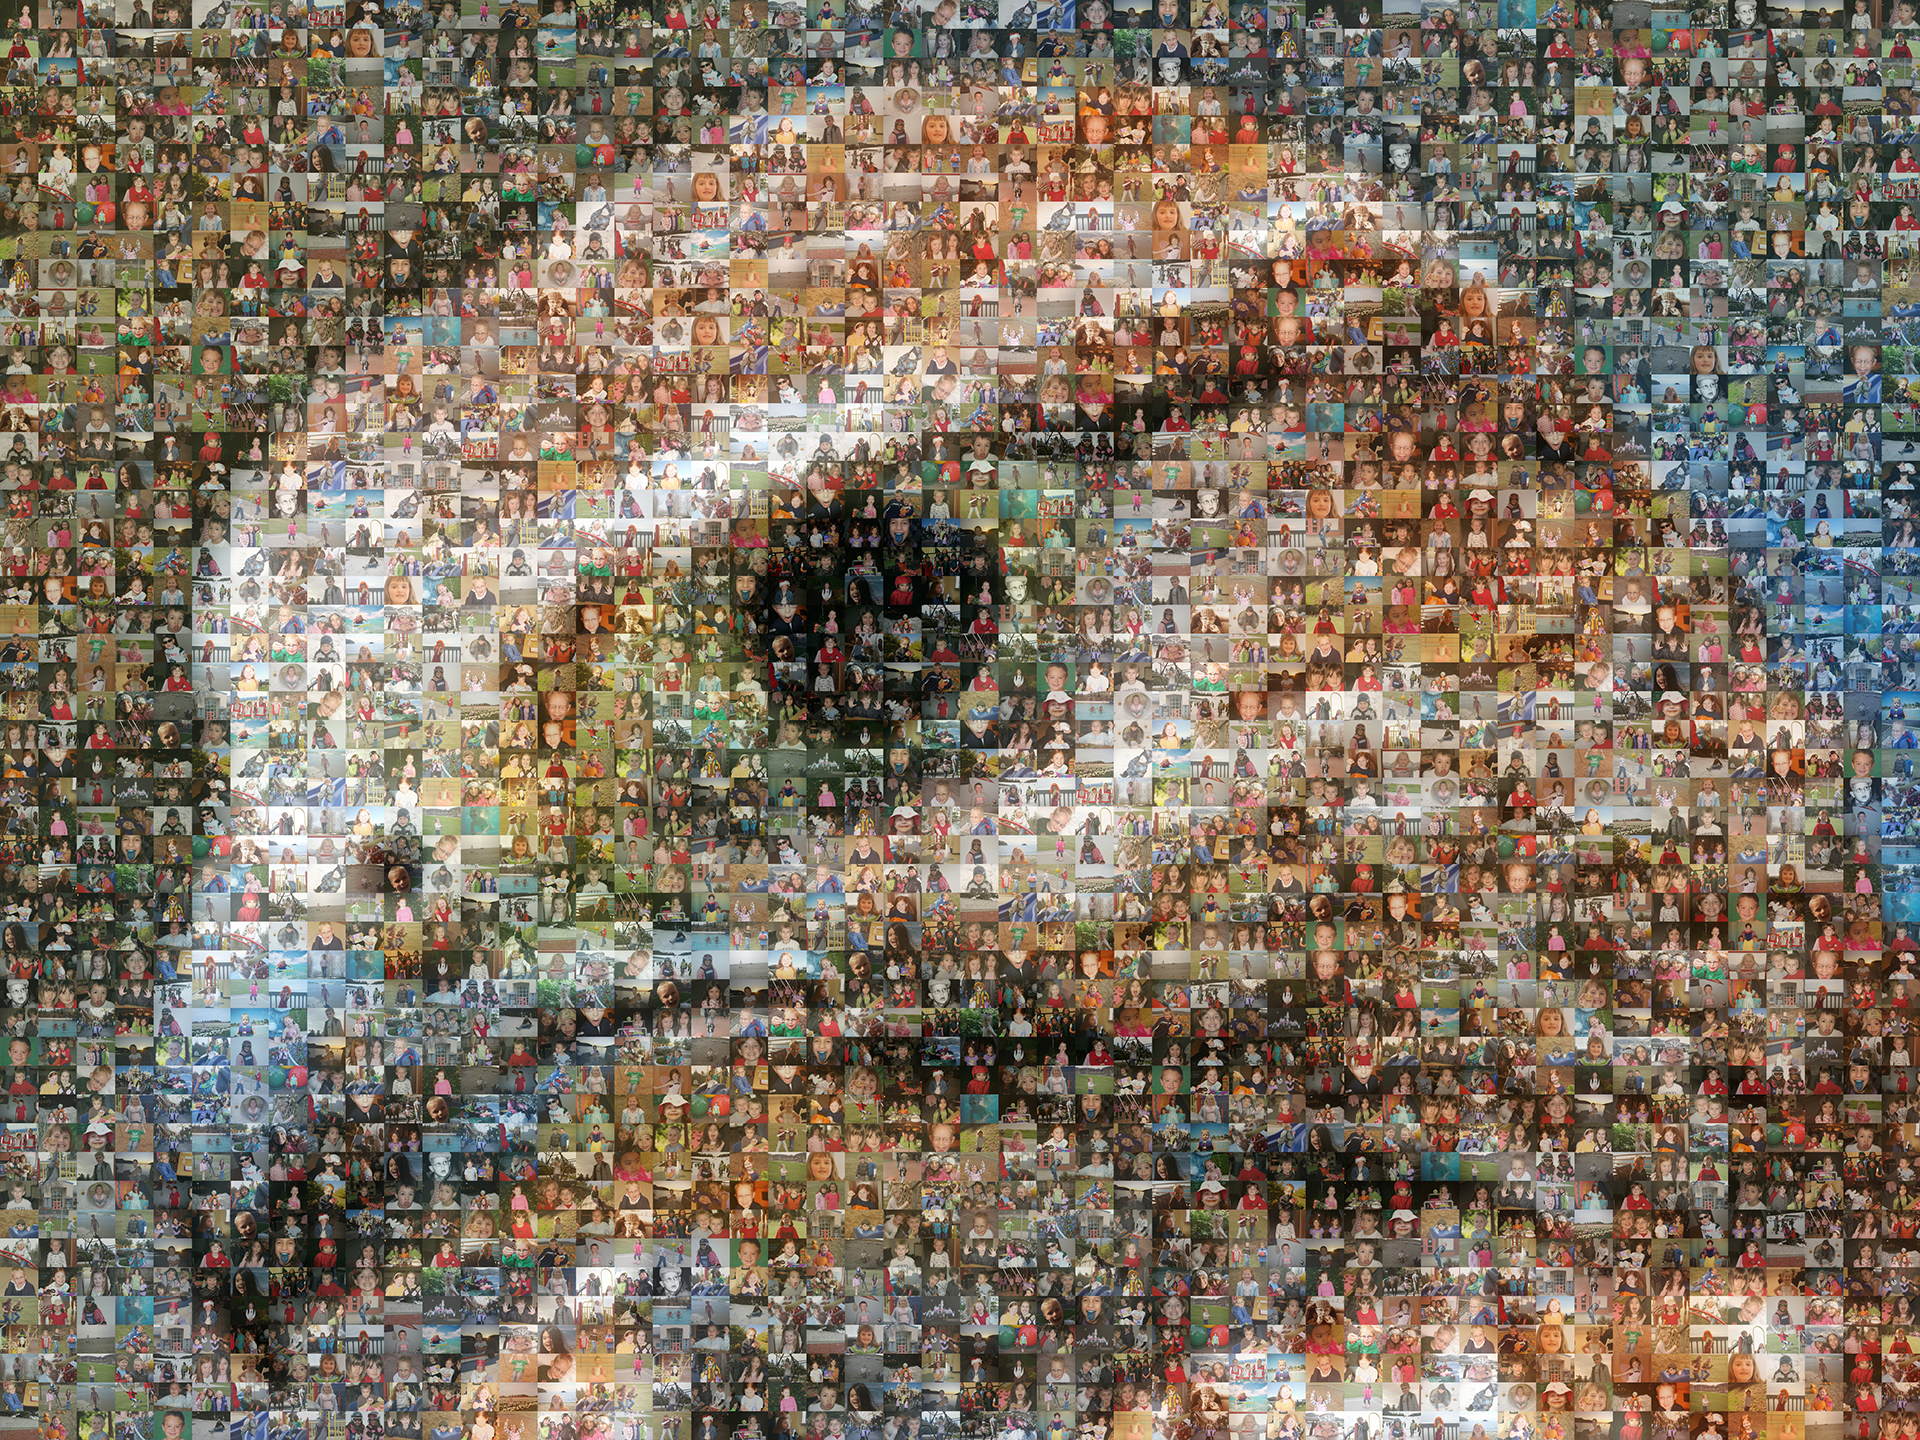 photo mosaic created using 200 student photos